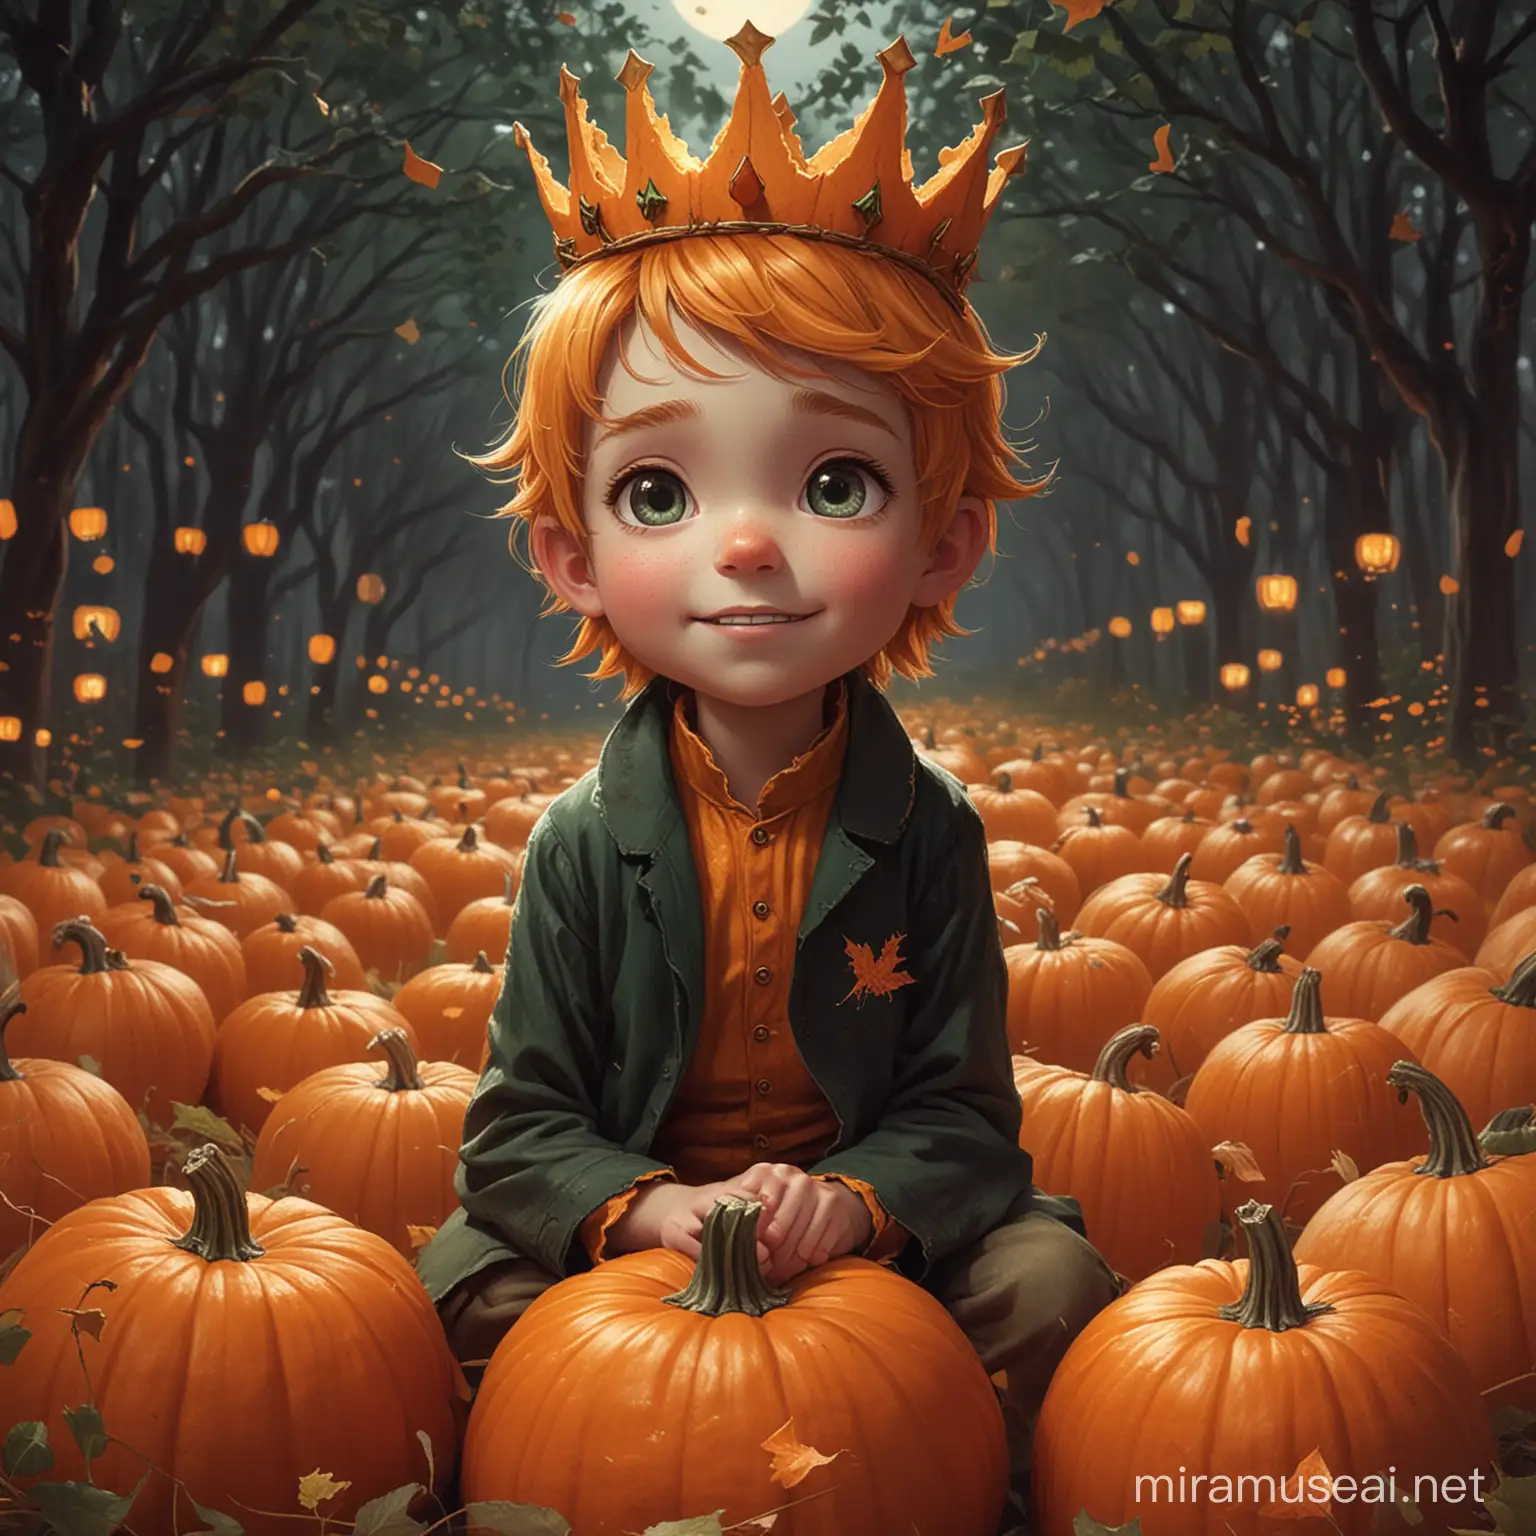 The Pumpkin prince